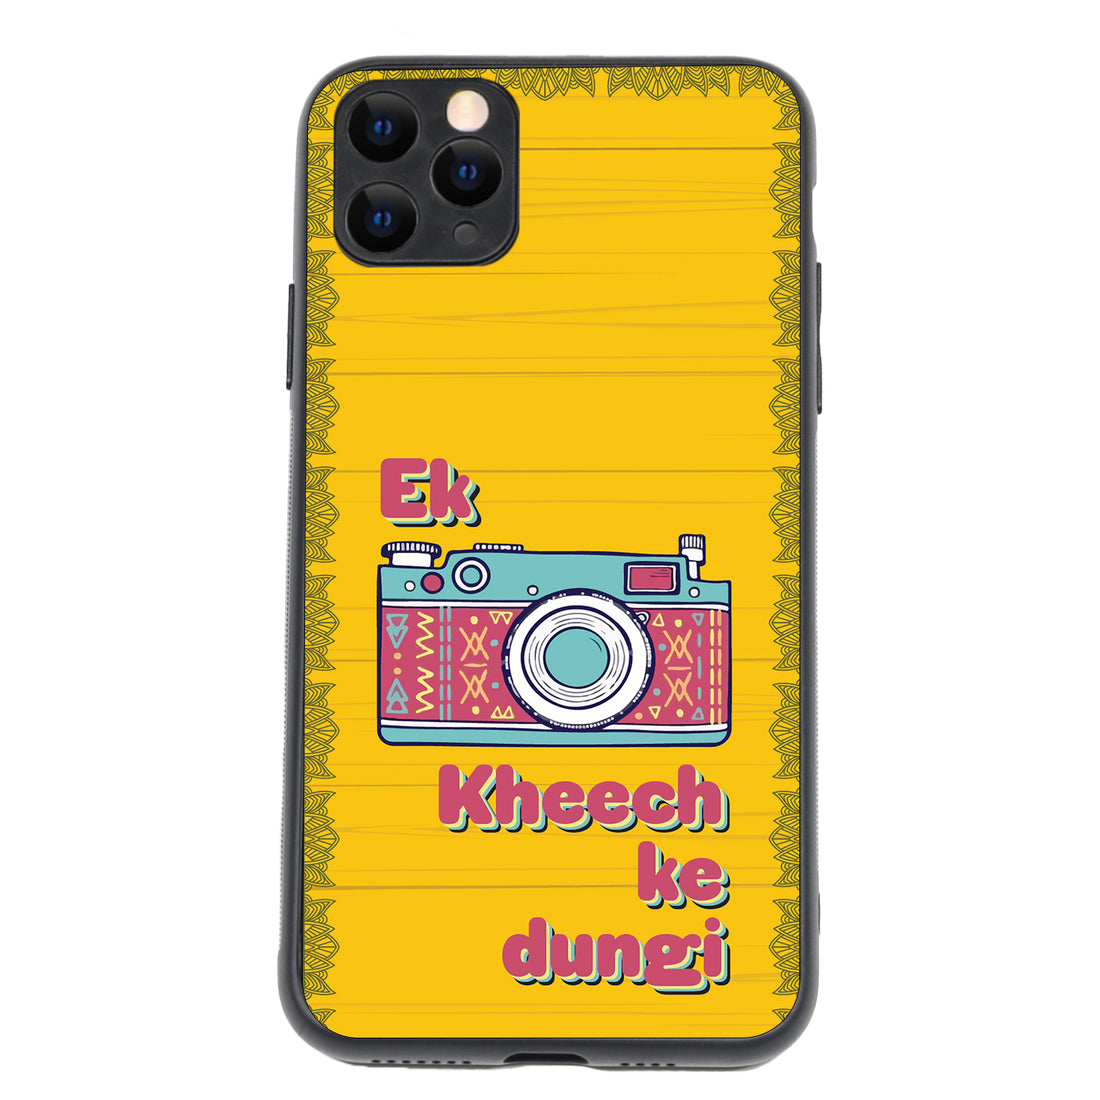 Ek Kheech Ke Dungi Motivational Quotes iPhone 11 Pro Max Case